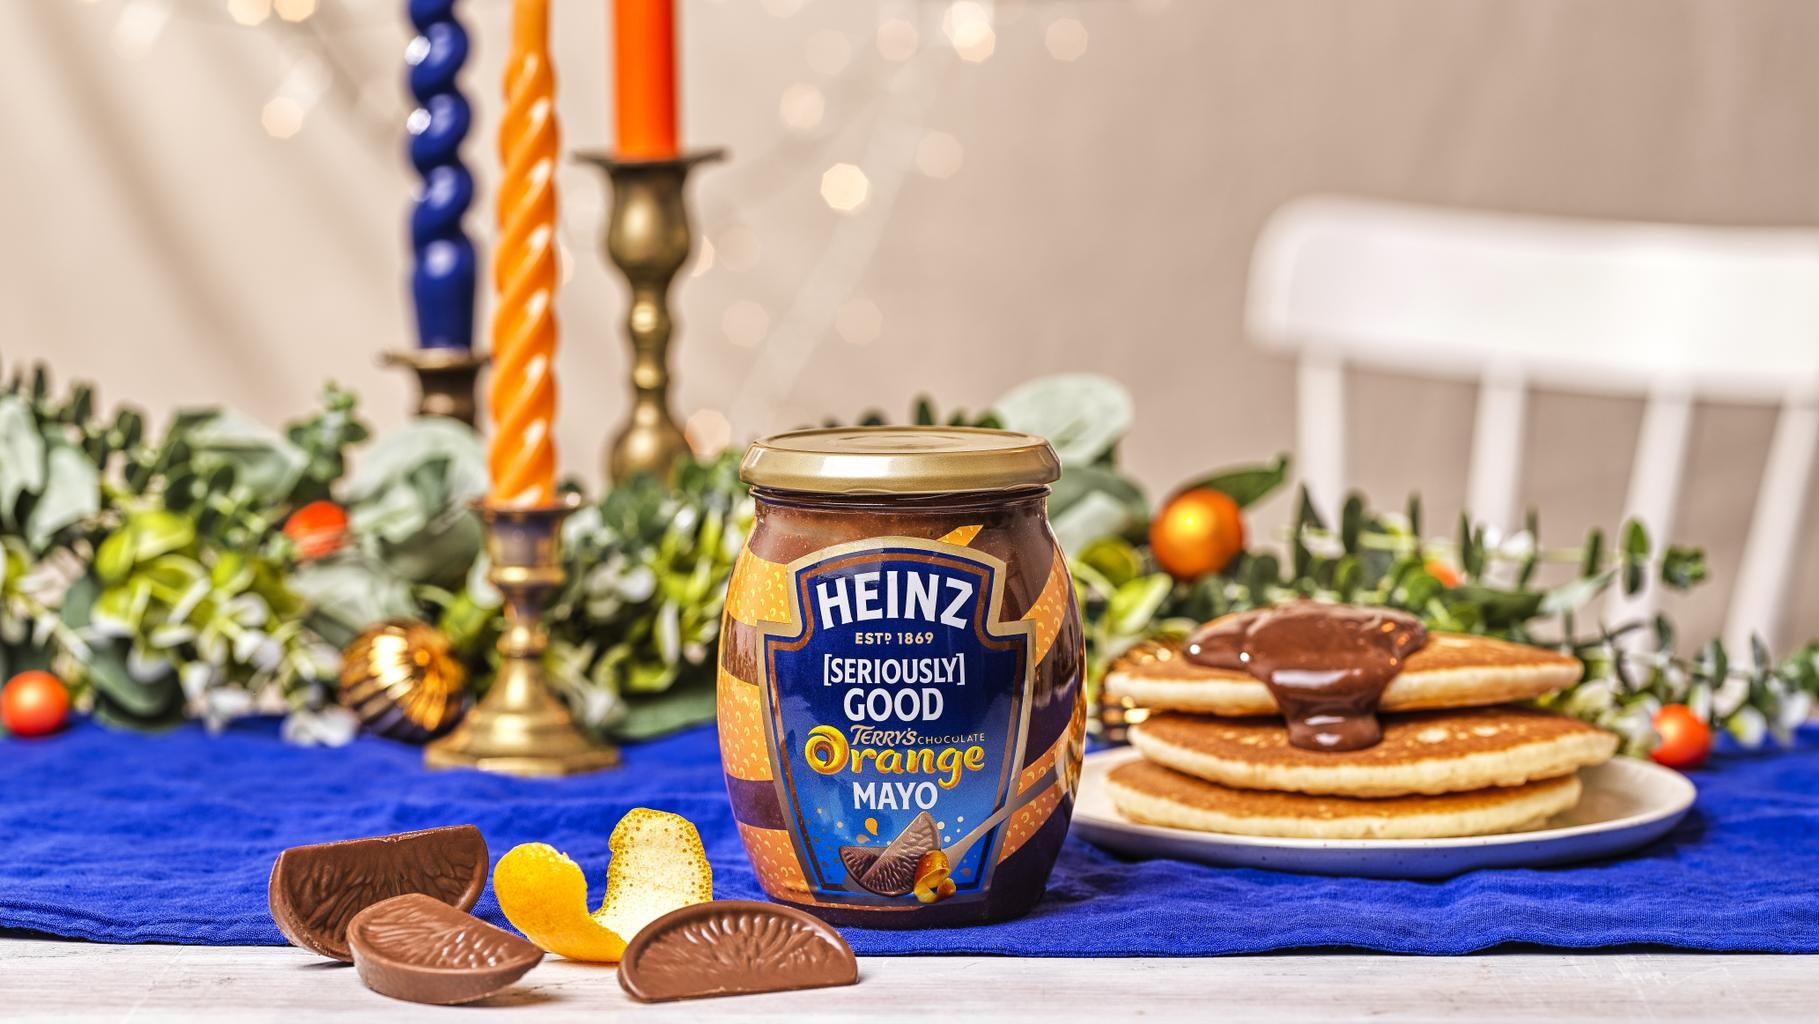 Heinz의 초콜릿 오렌지 마요를 구입하는 것은 생각보다 복잡합니다.